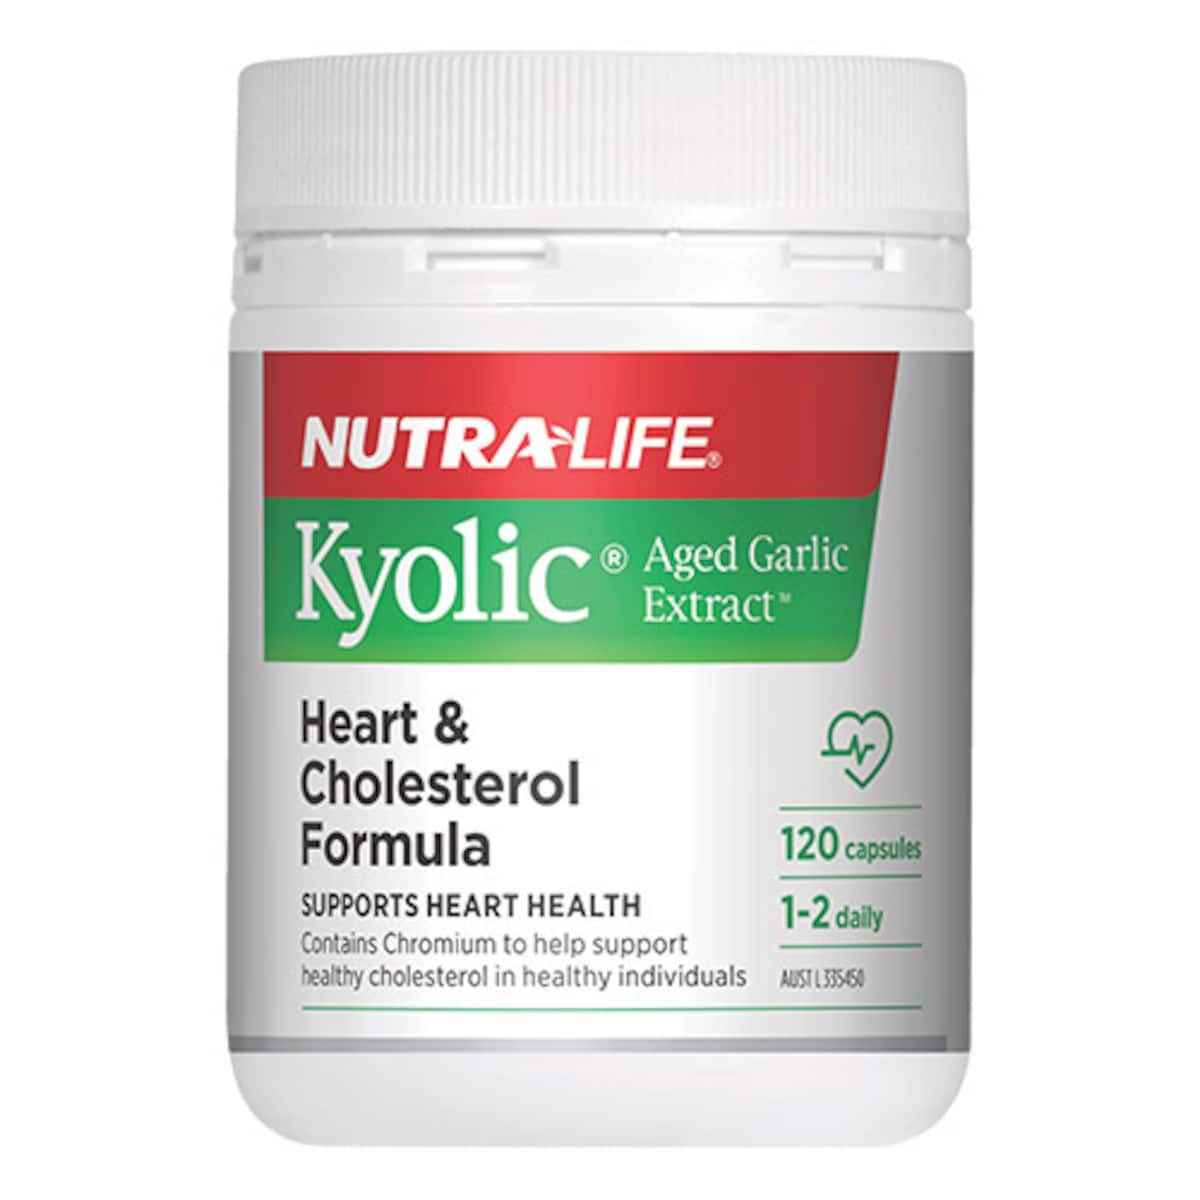 Nutra-Life Kyolic Aged Garlic Extract Heart & Cholesterol 120 Capsules